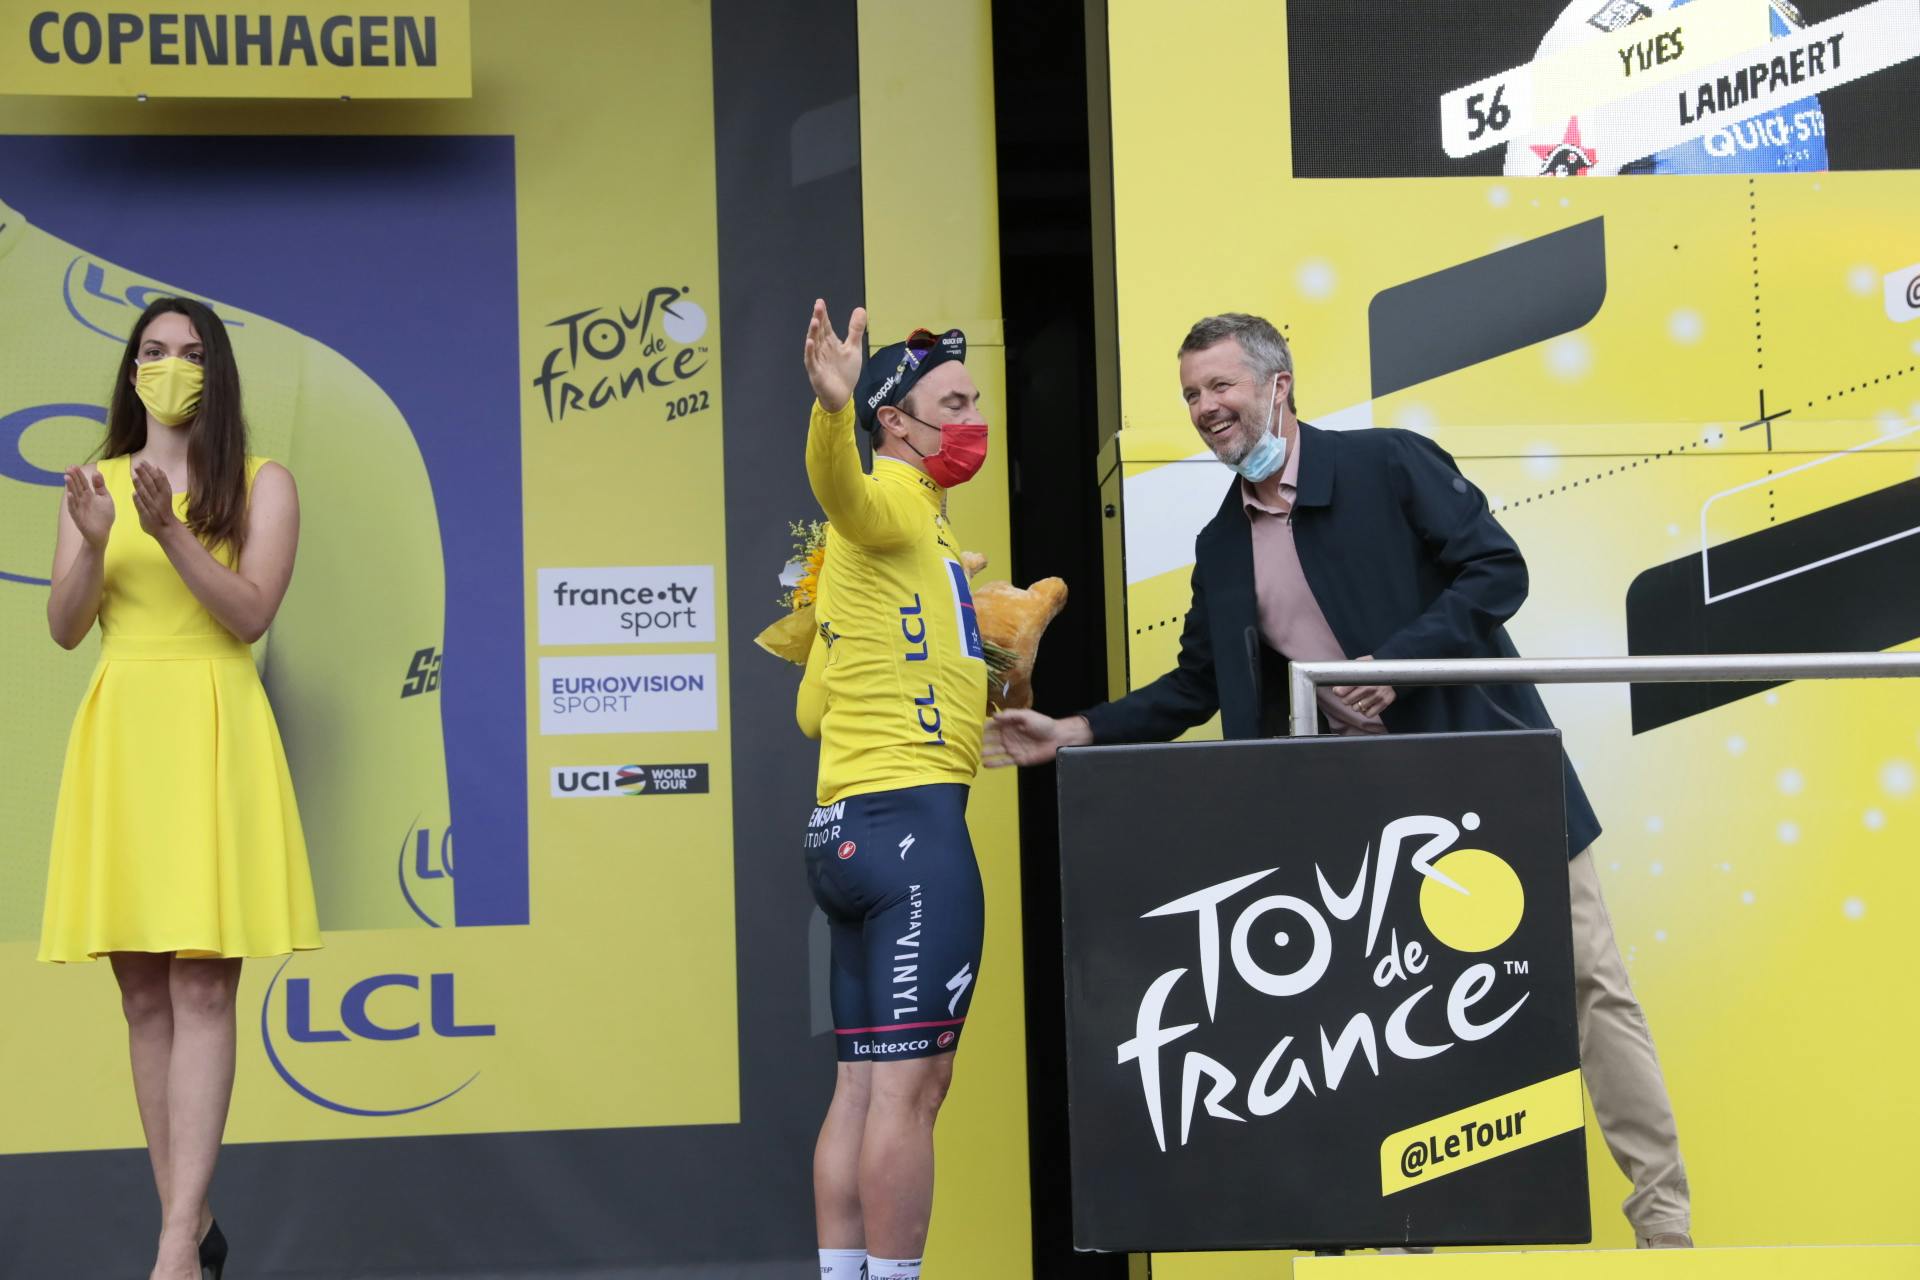 Kronprins Frederik overrakte den gule trøje til Yves Lampaert, der vandt 1. etape.